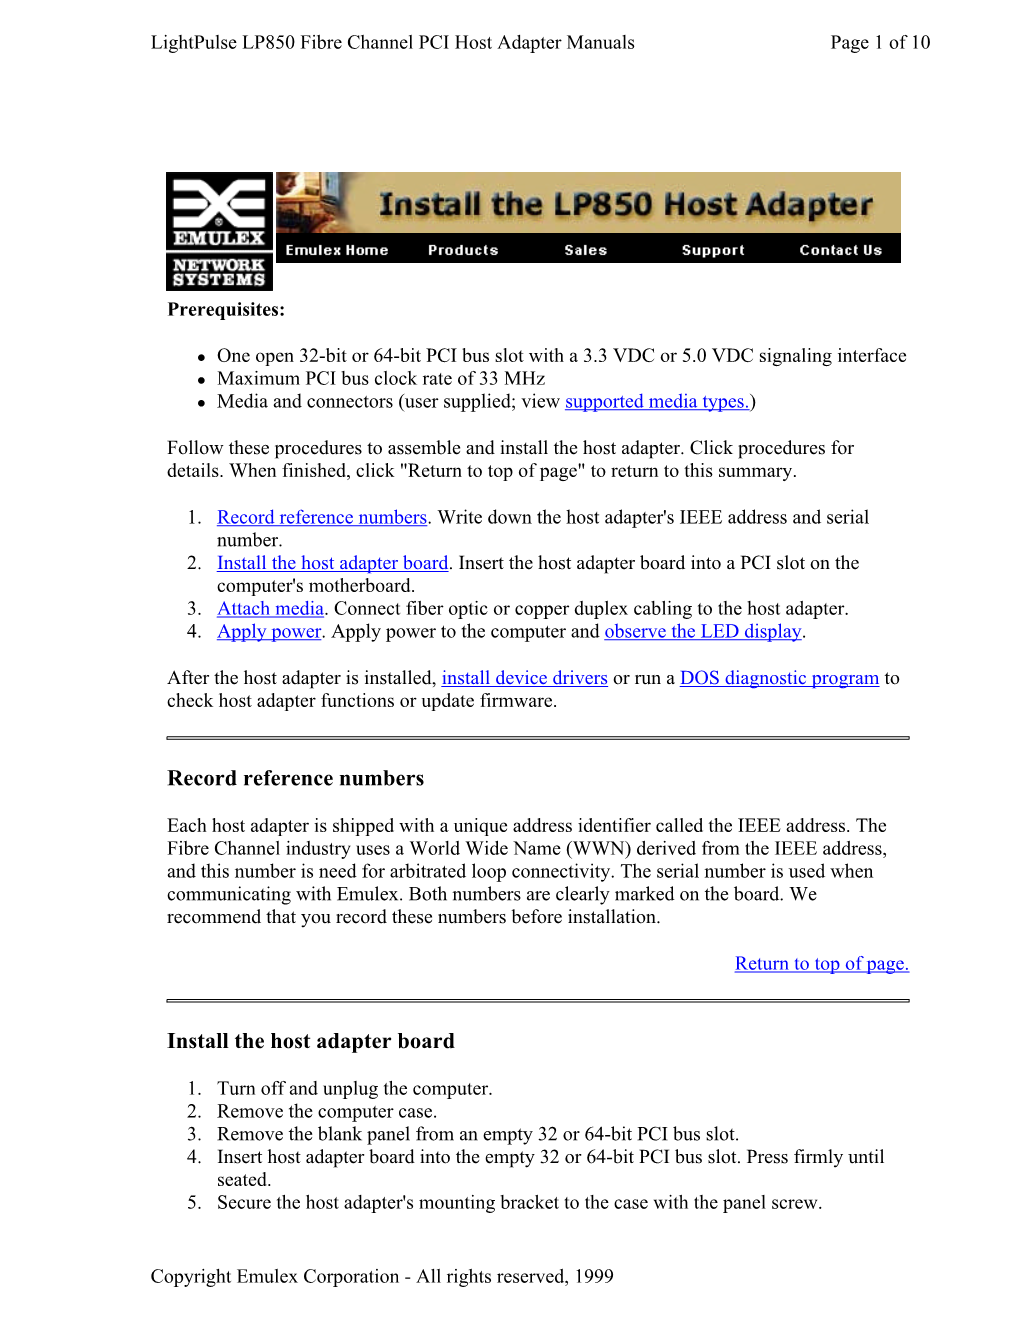 Emulex LP850 Host Bus Adapter Documentation